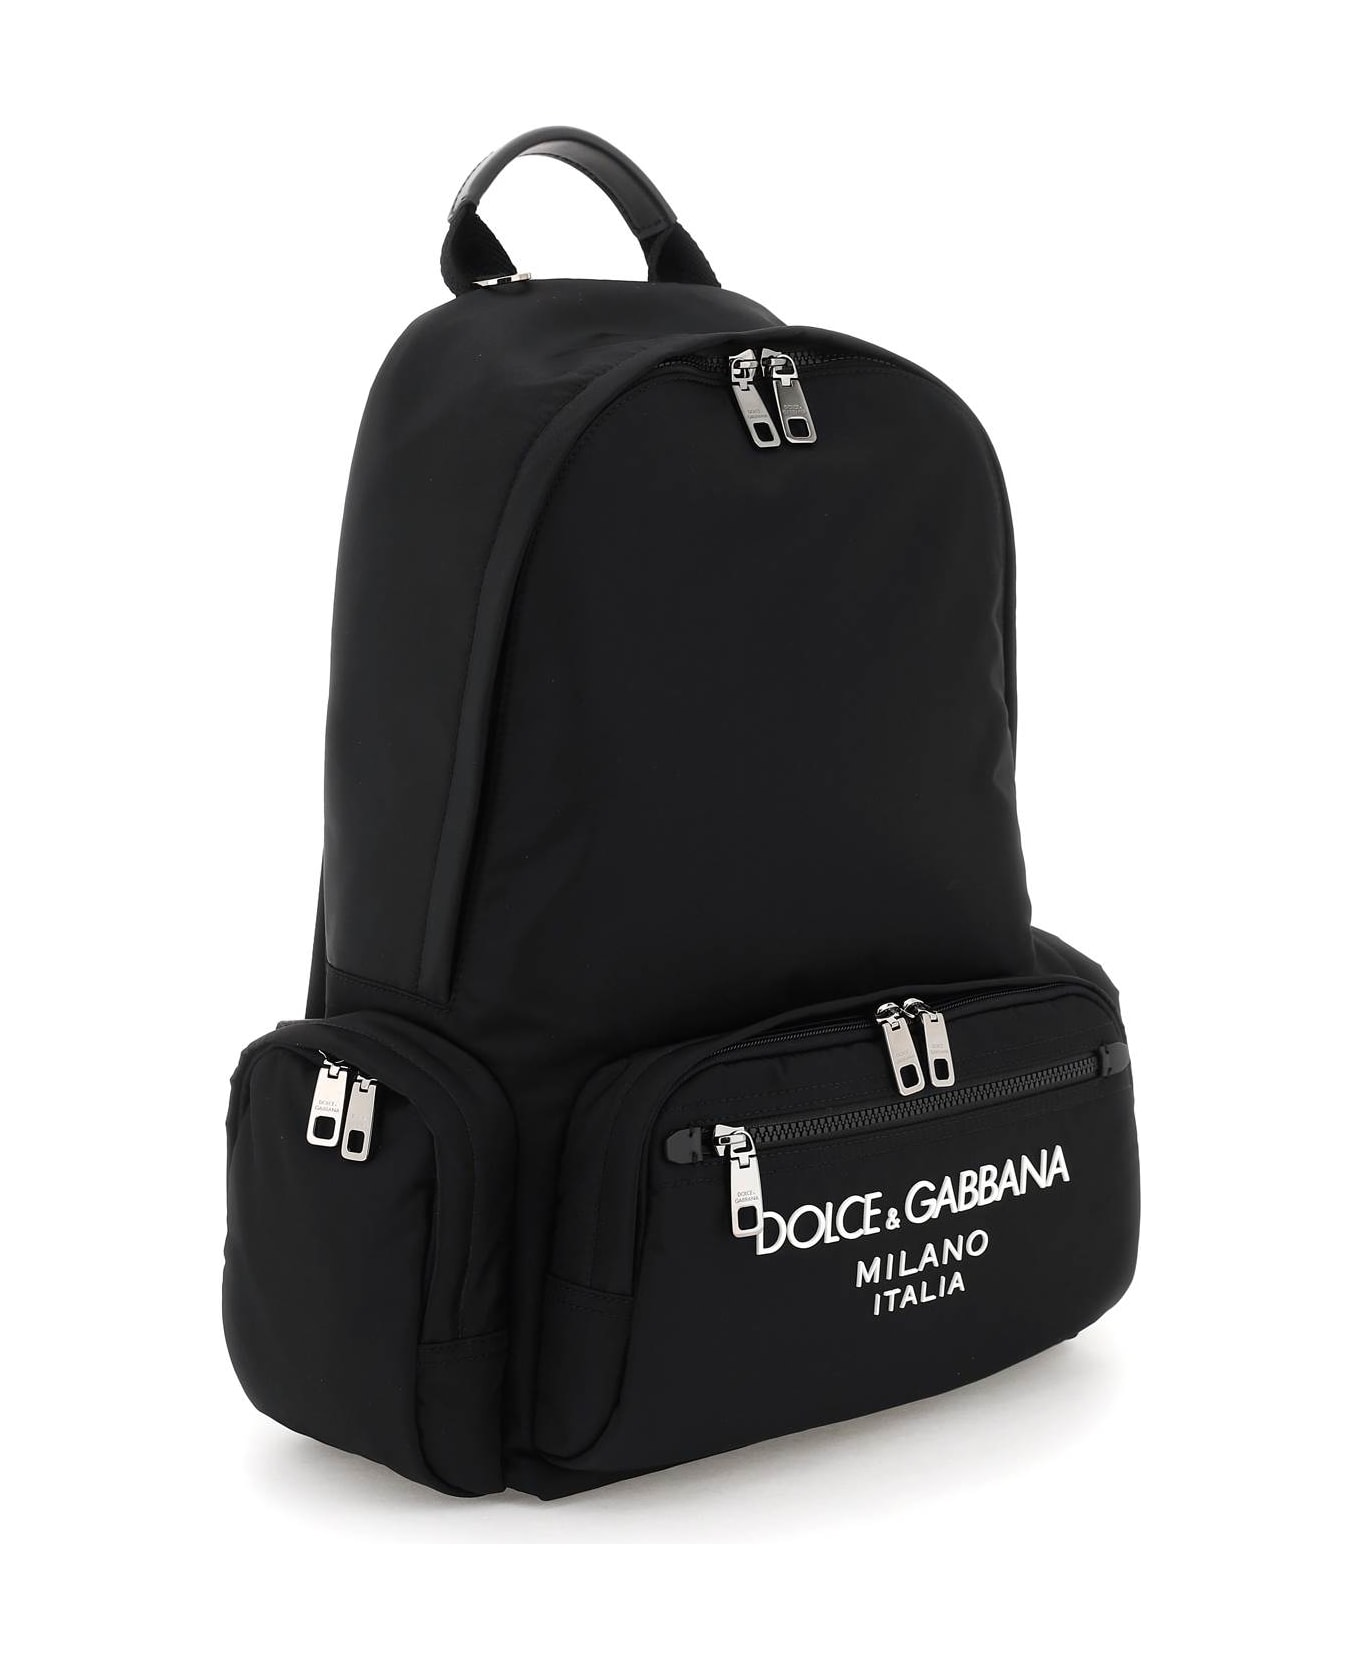 Dolce & Gabbana Nylon Backpack With Logo - Nero/nero バックパック